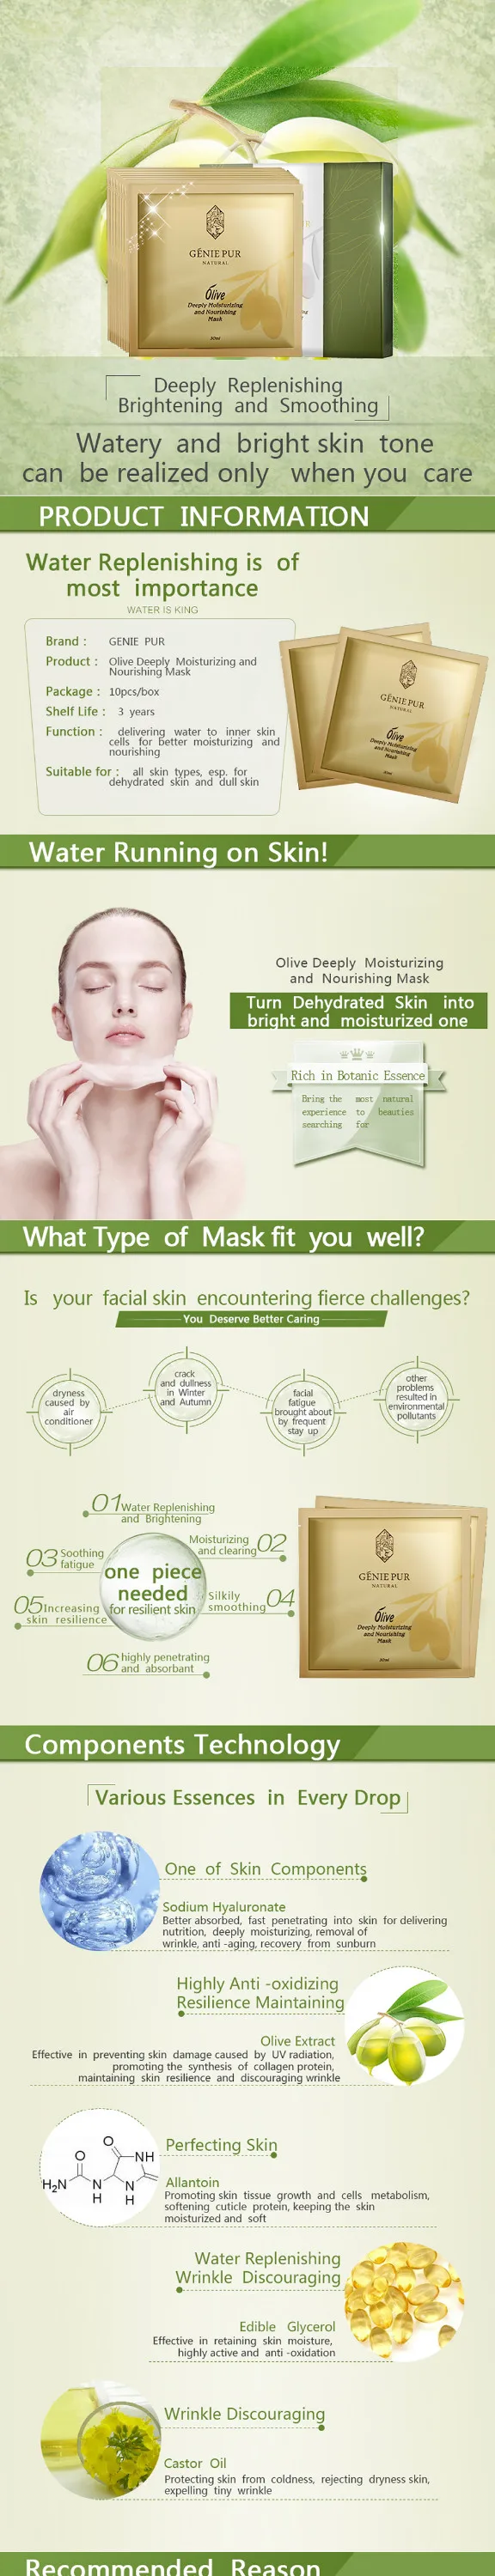  skin whitening facial mask item herbal extract skin type suitable